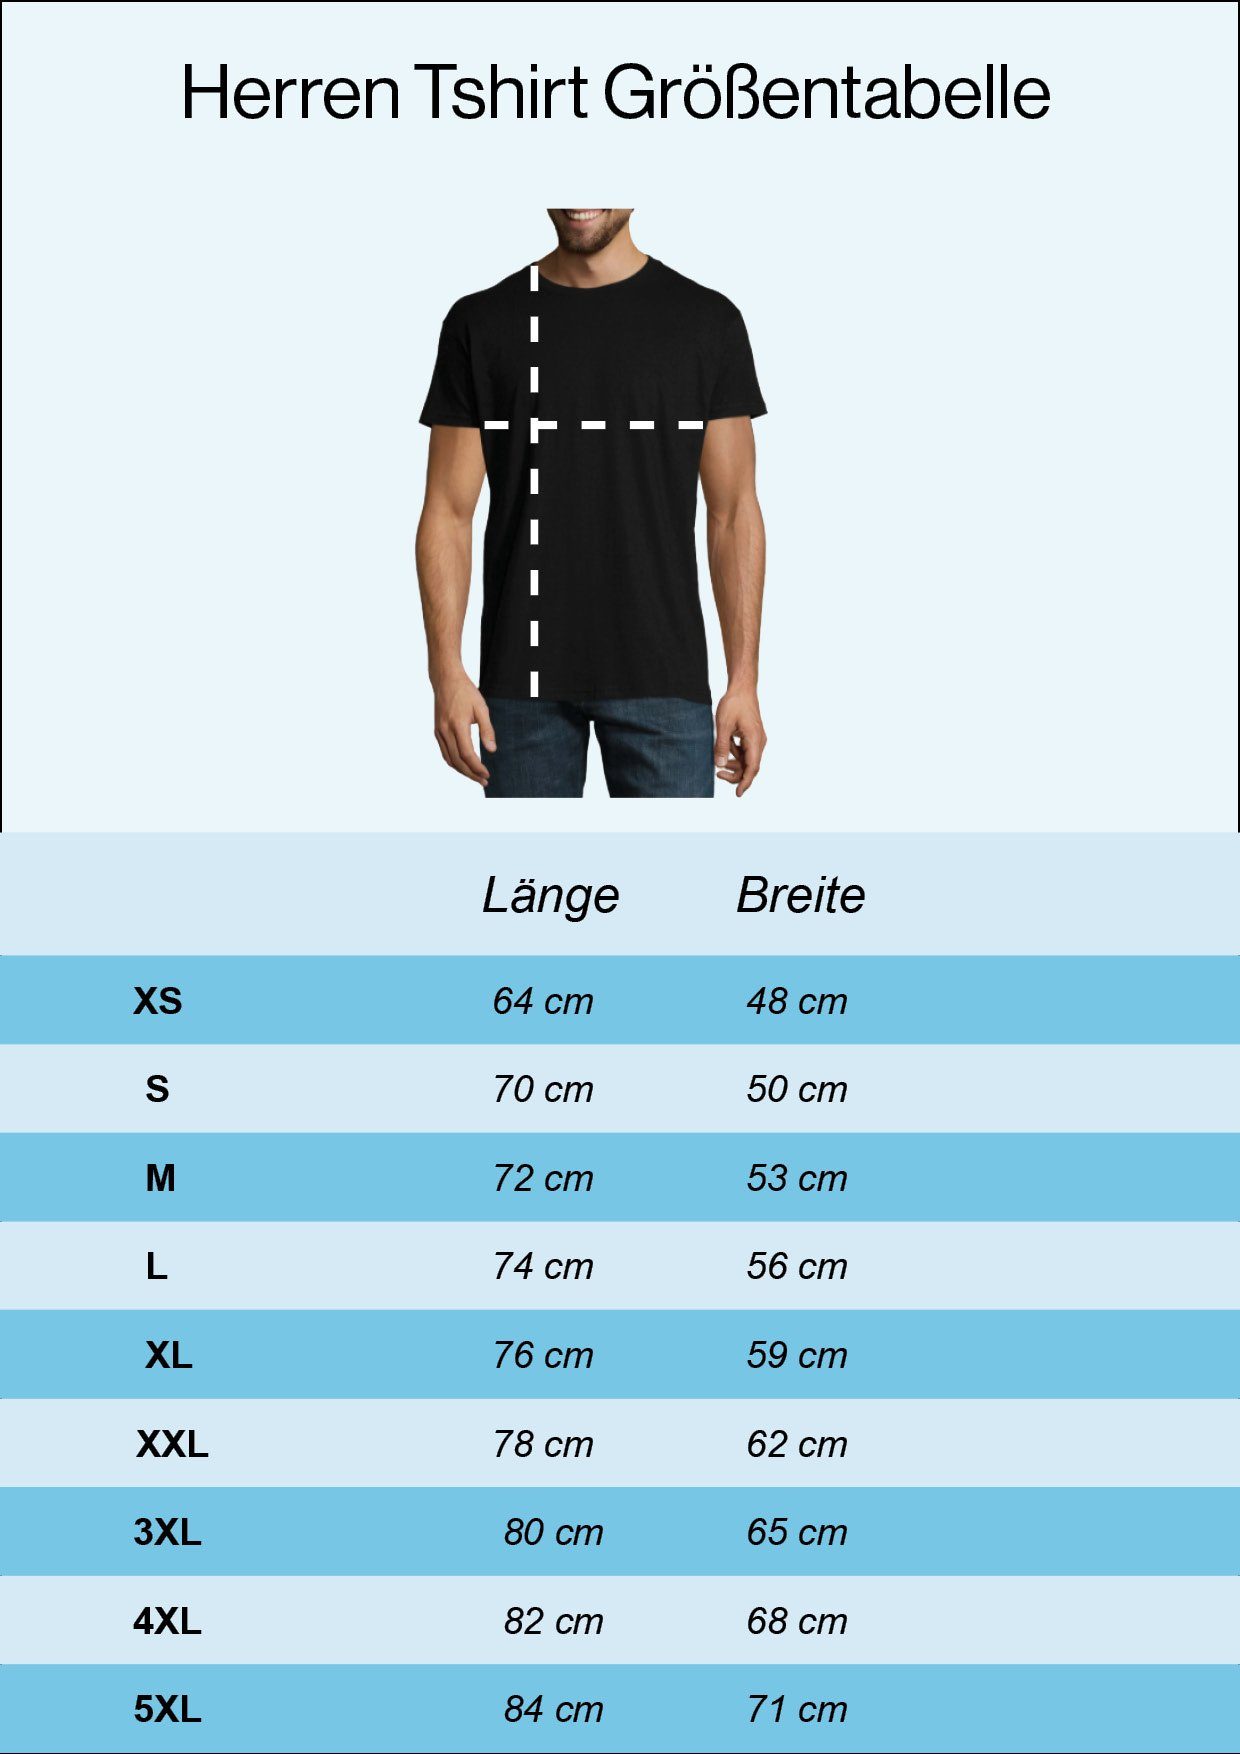 Weiß Herren T-Shirt Angeln Heartbeat mit Angler Designz Youth Shirt lustigem Frontprint